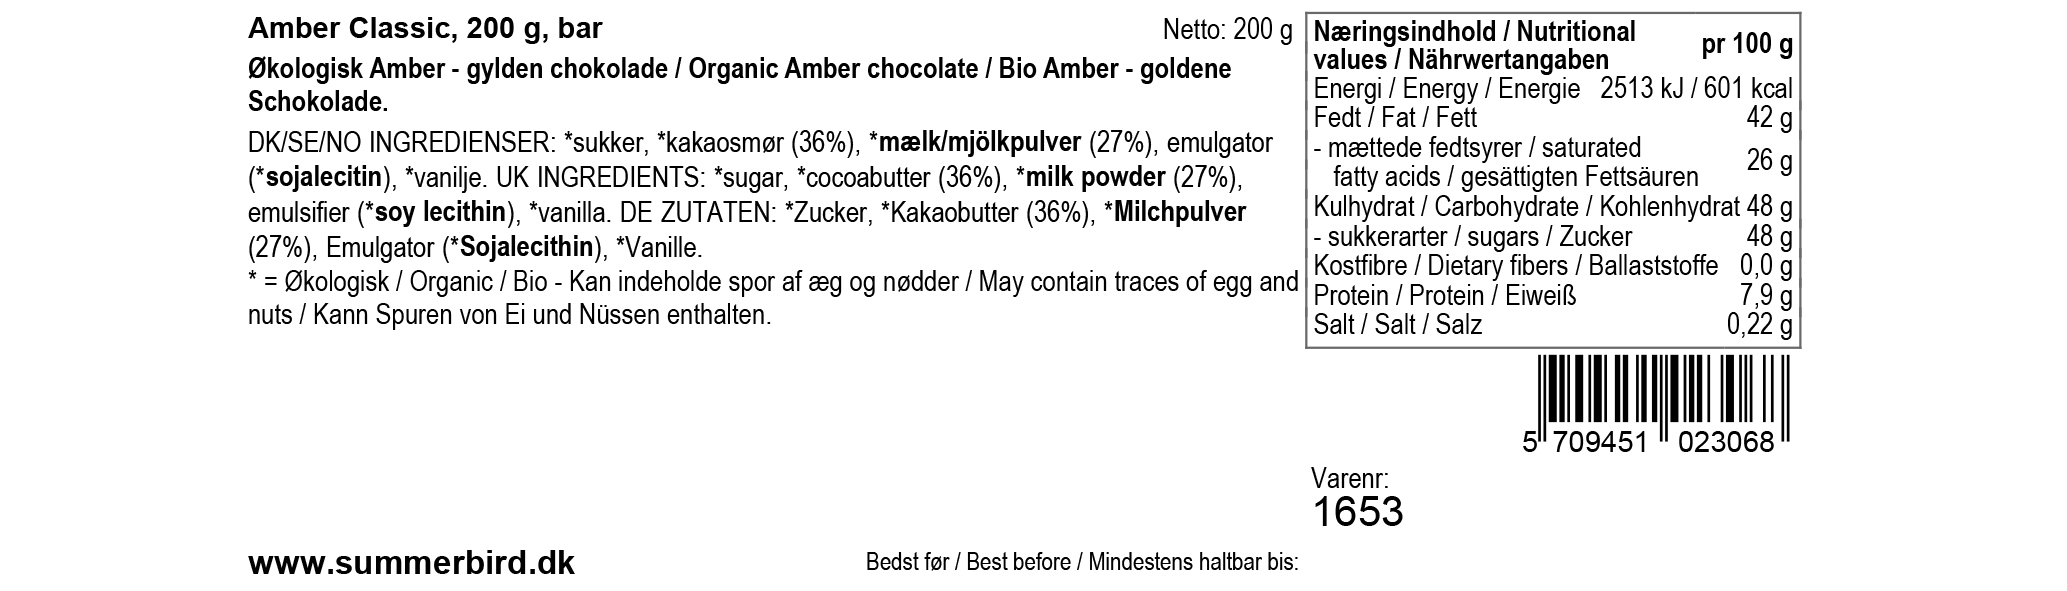 Se ingredienser - Amber Classic